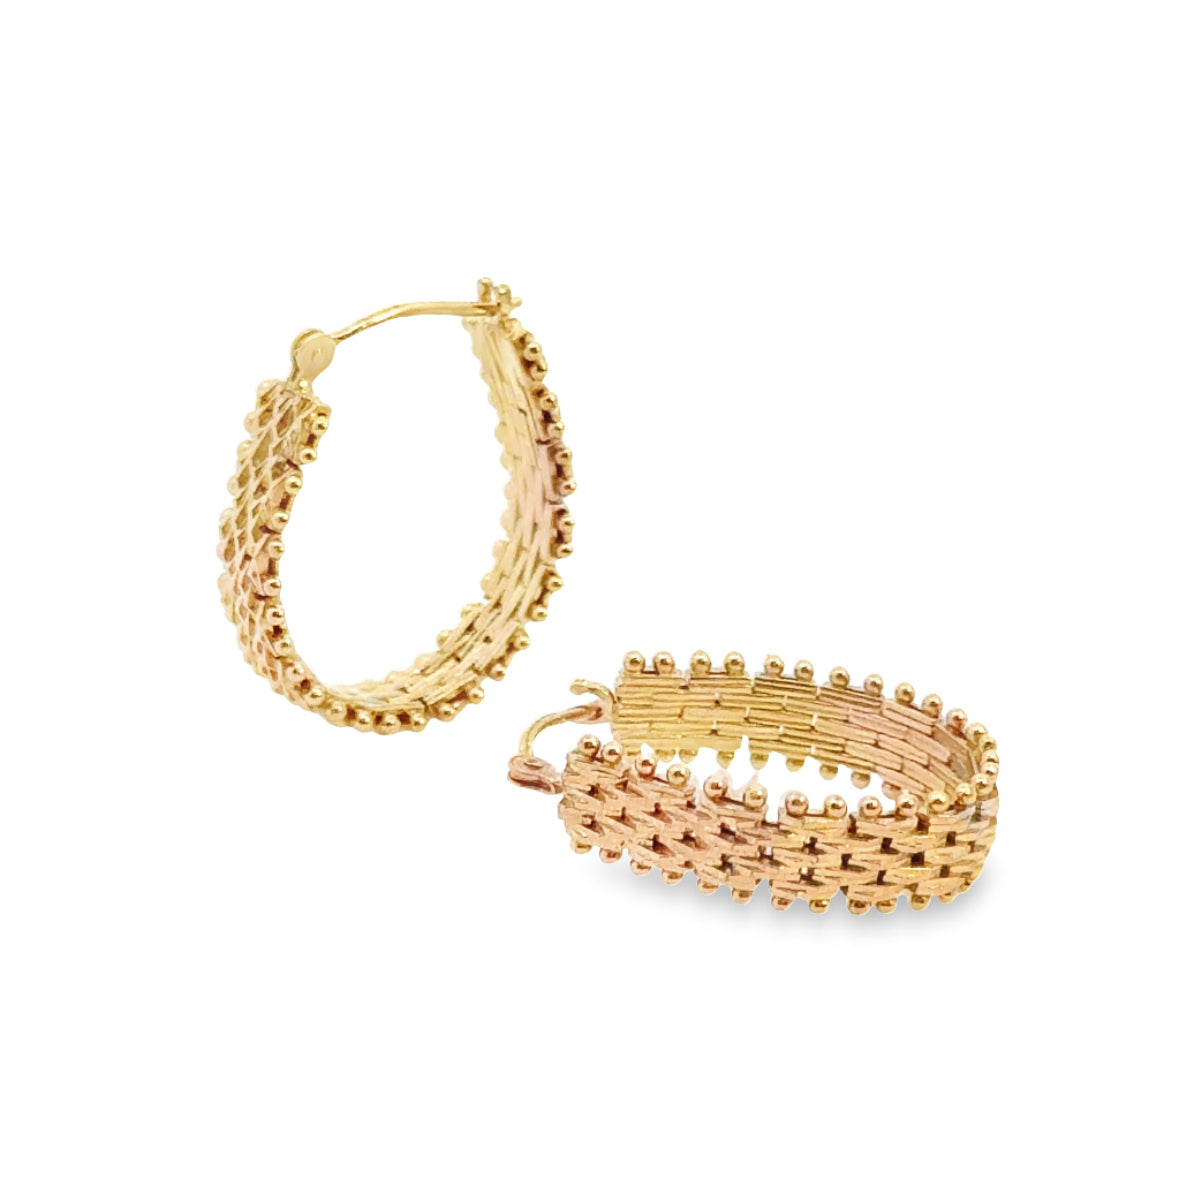 Unique 14K Yellow Gold Ornate Link Hoop Earrings